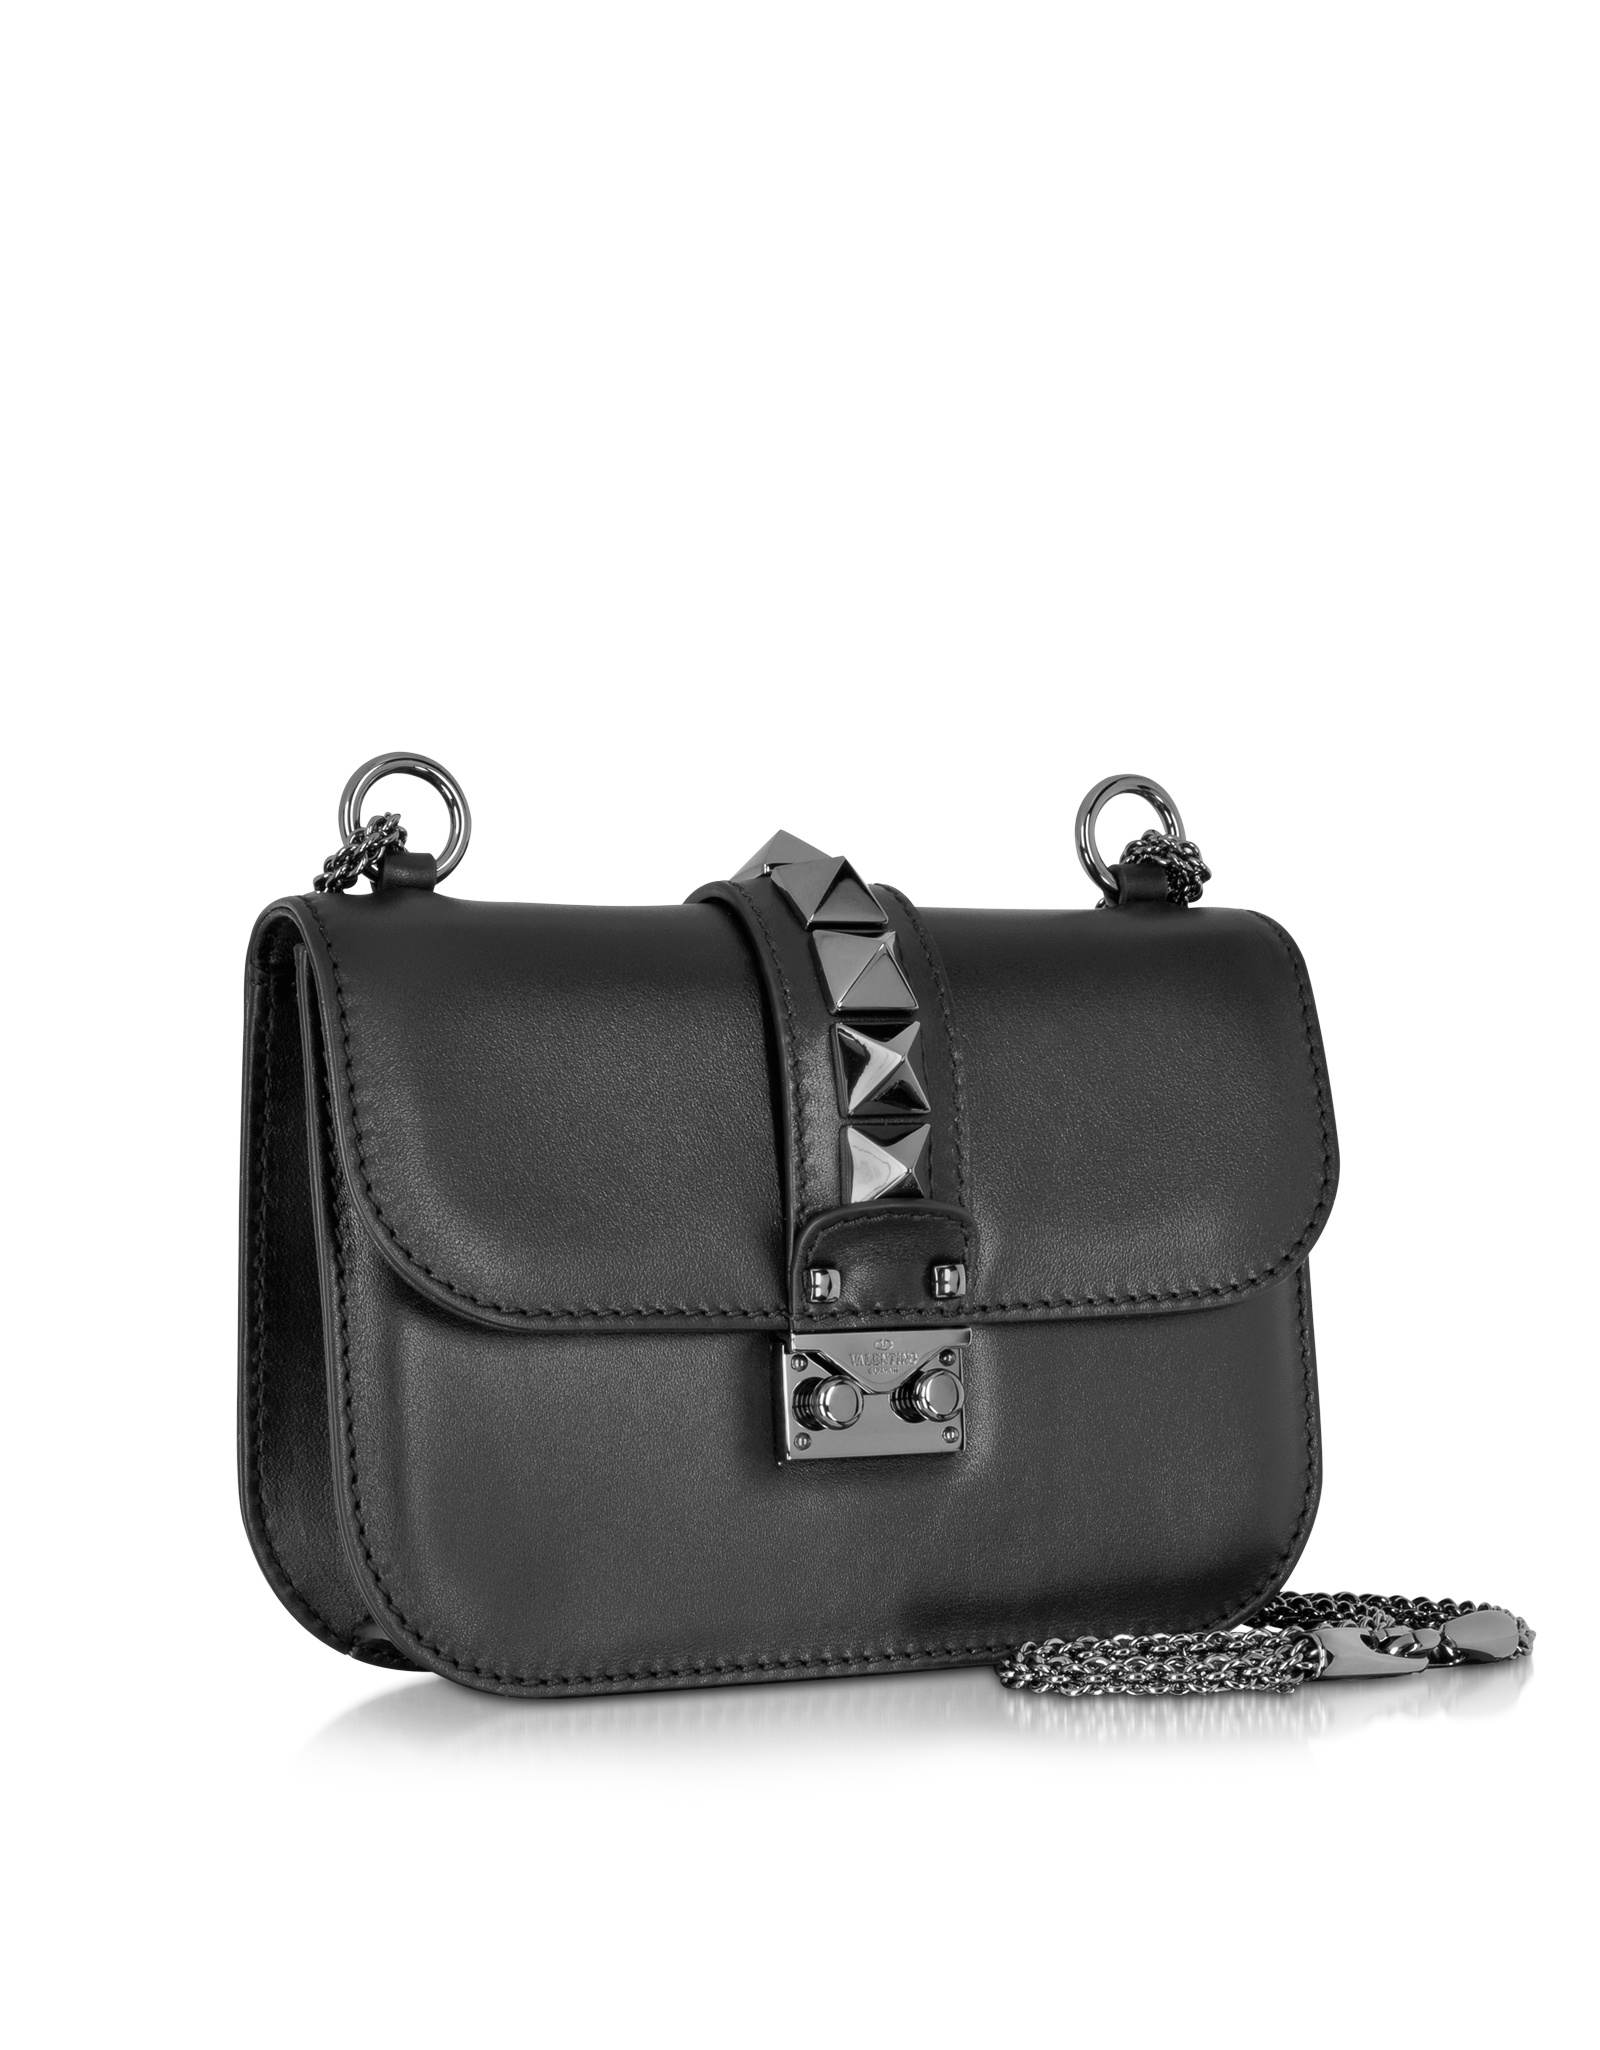 Lyst - Valentino Noir Small Chain Shoulder Bag in Black